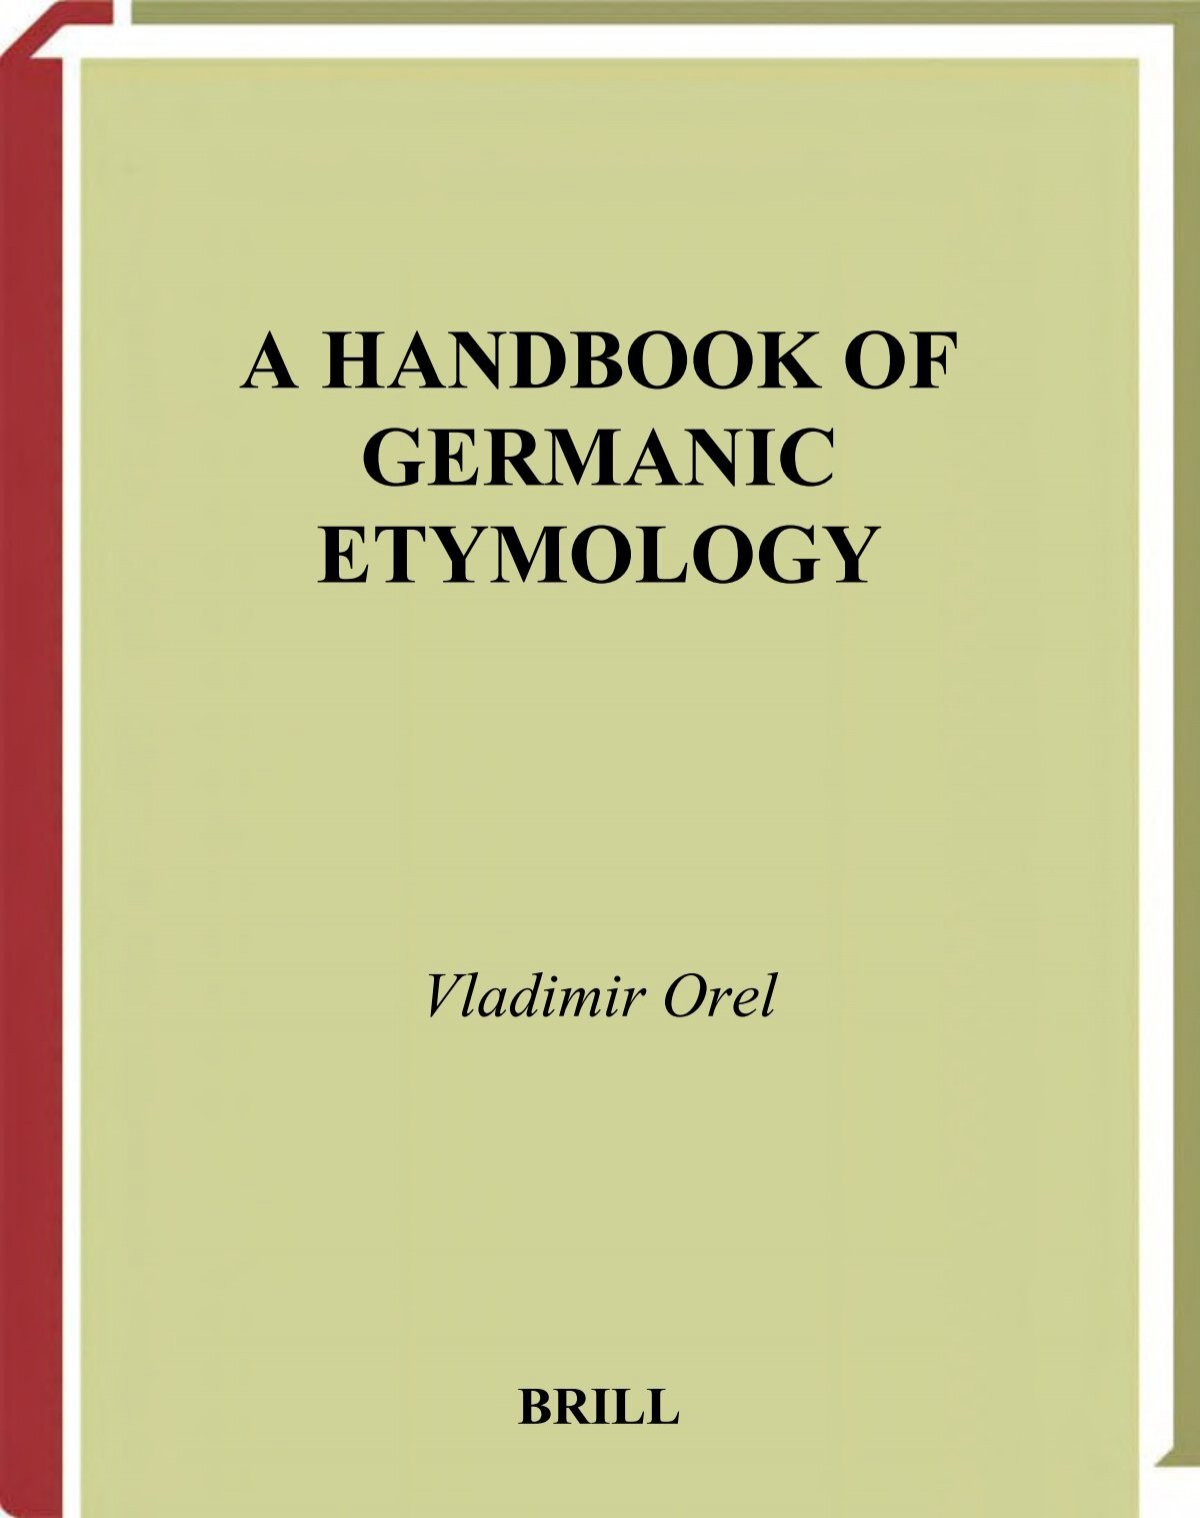 A HANDBOOK OF GERMANIC ETYMOLOGY - Turuz.info